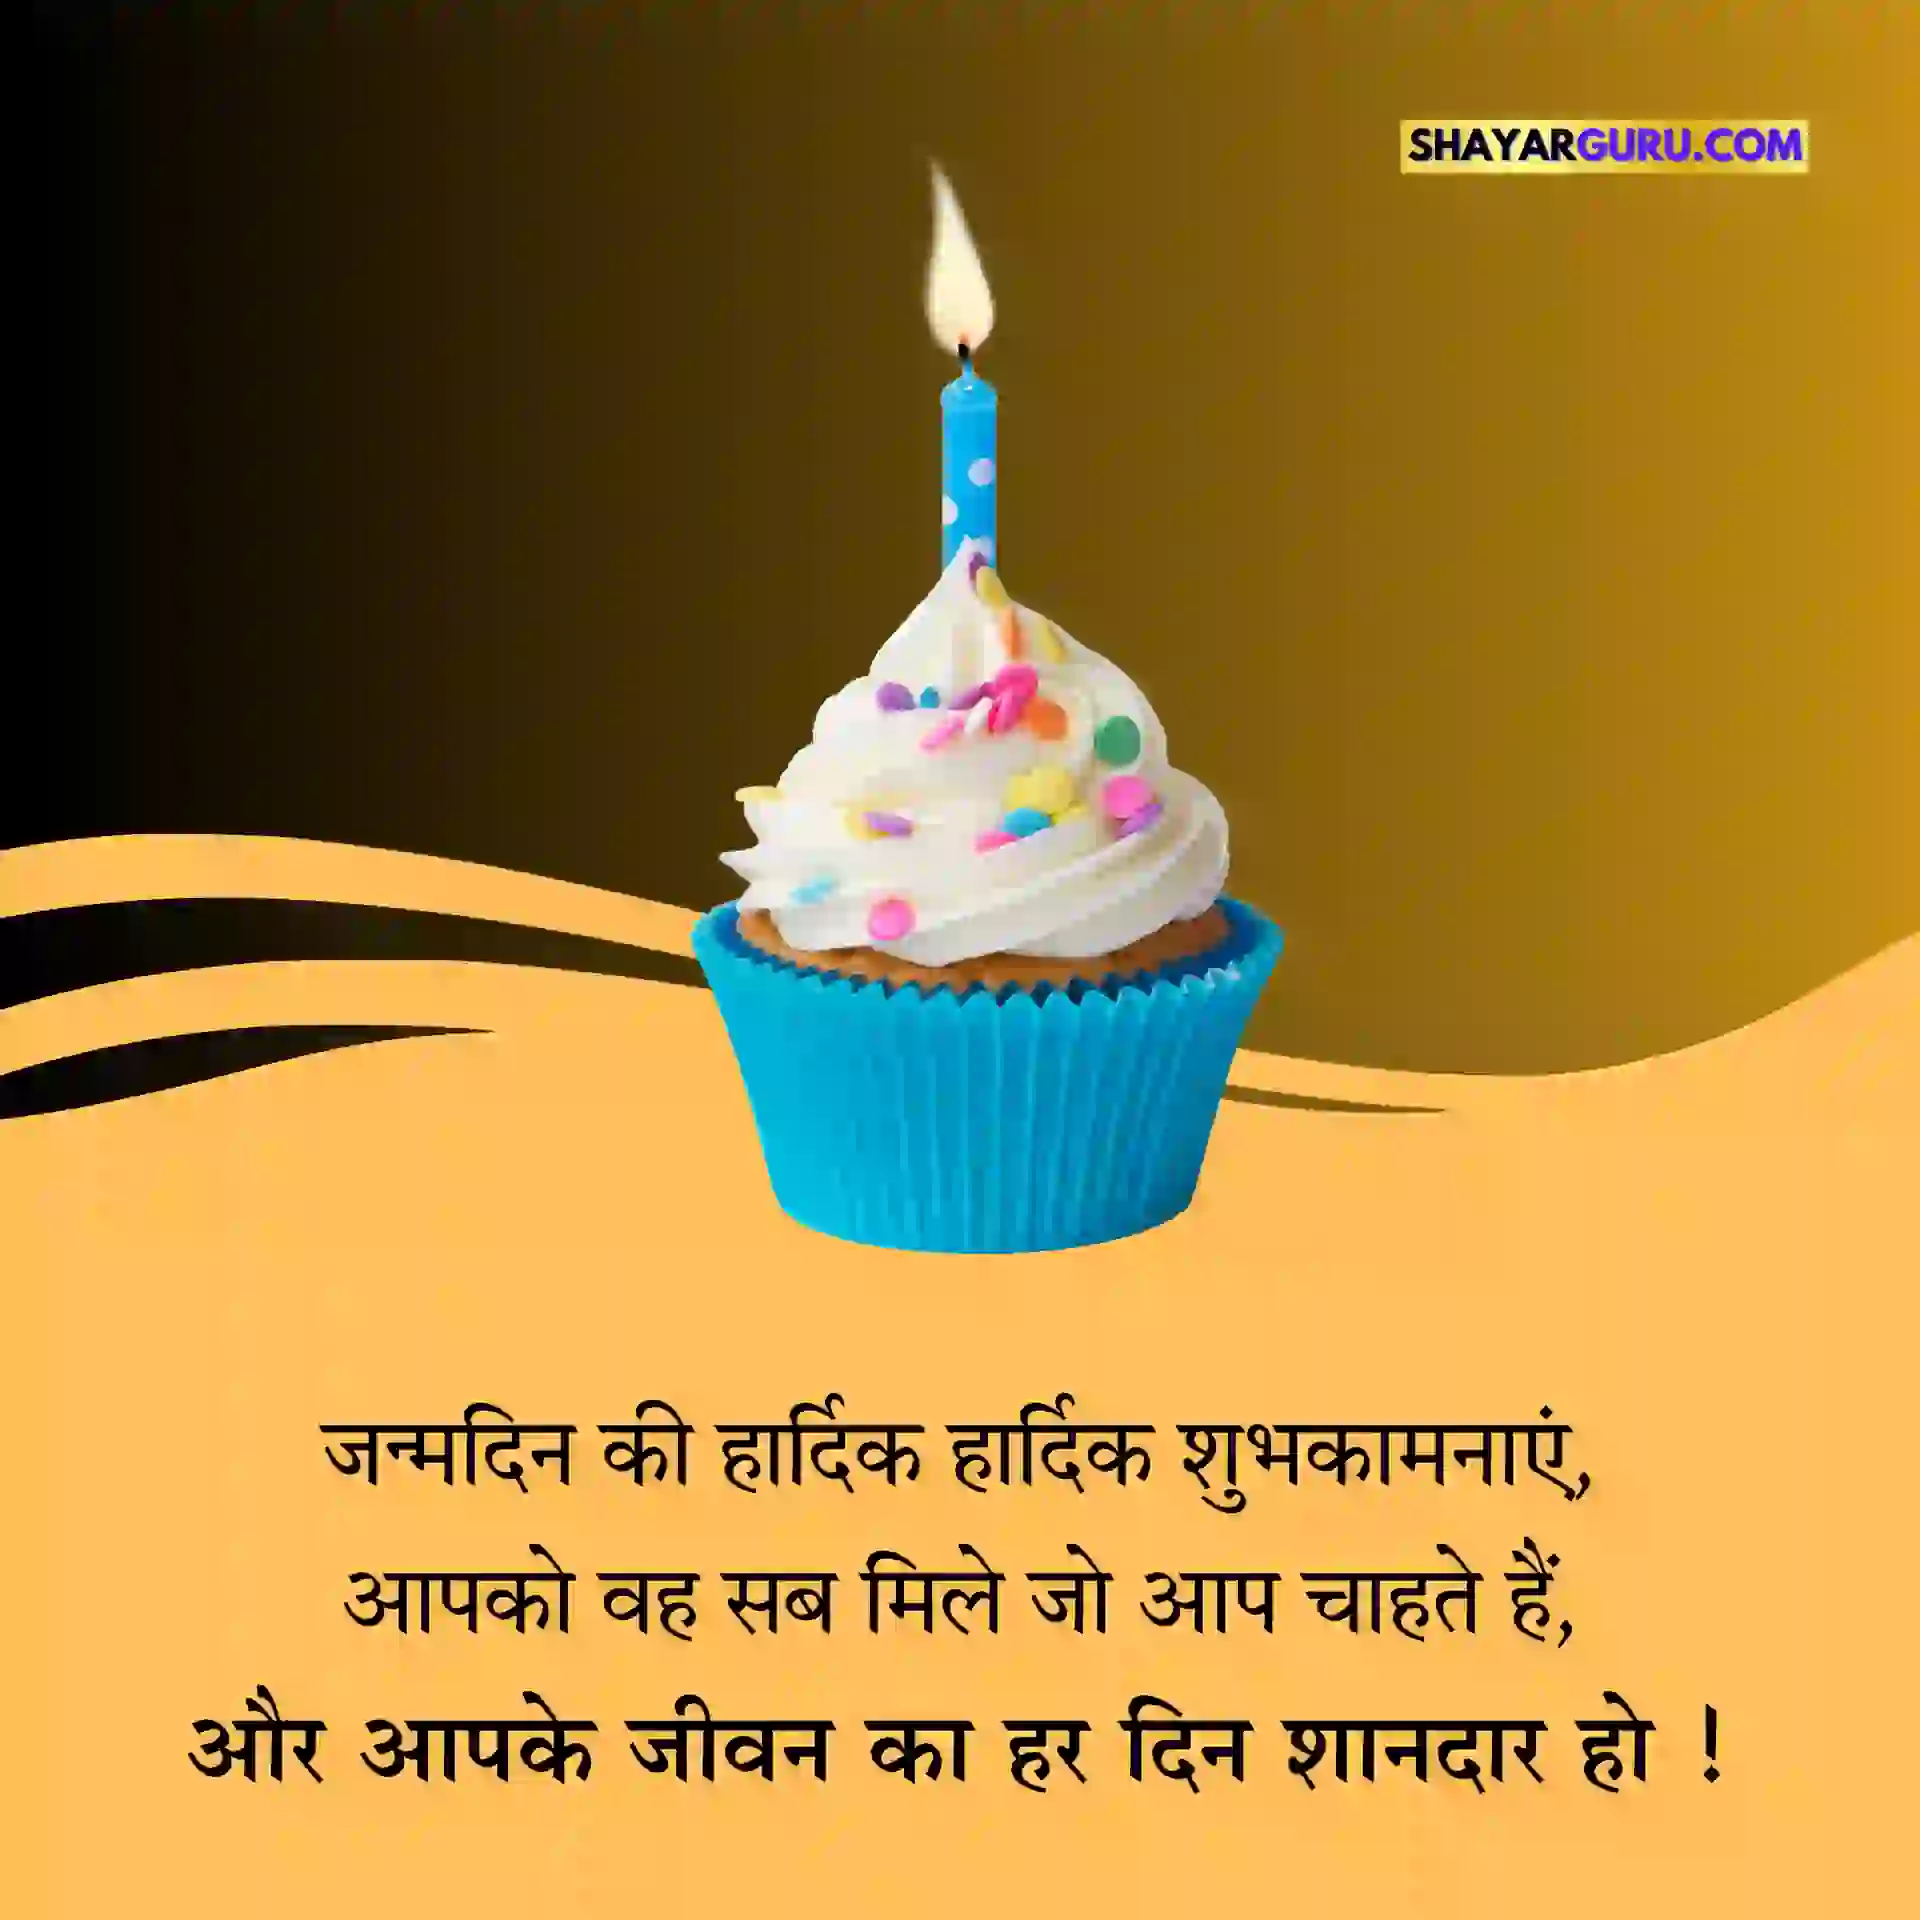 Happy Birthday Wishes in Hndi Image